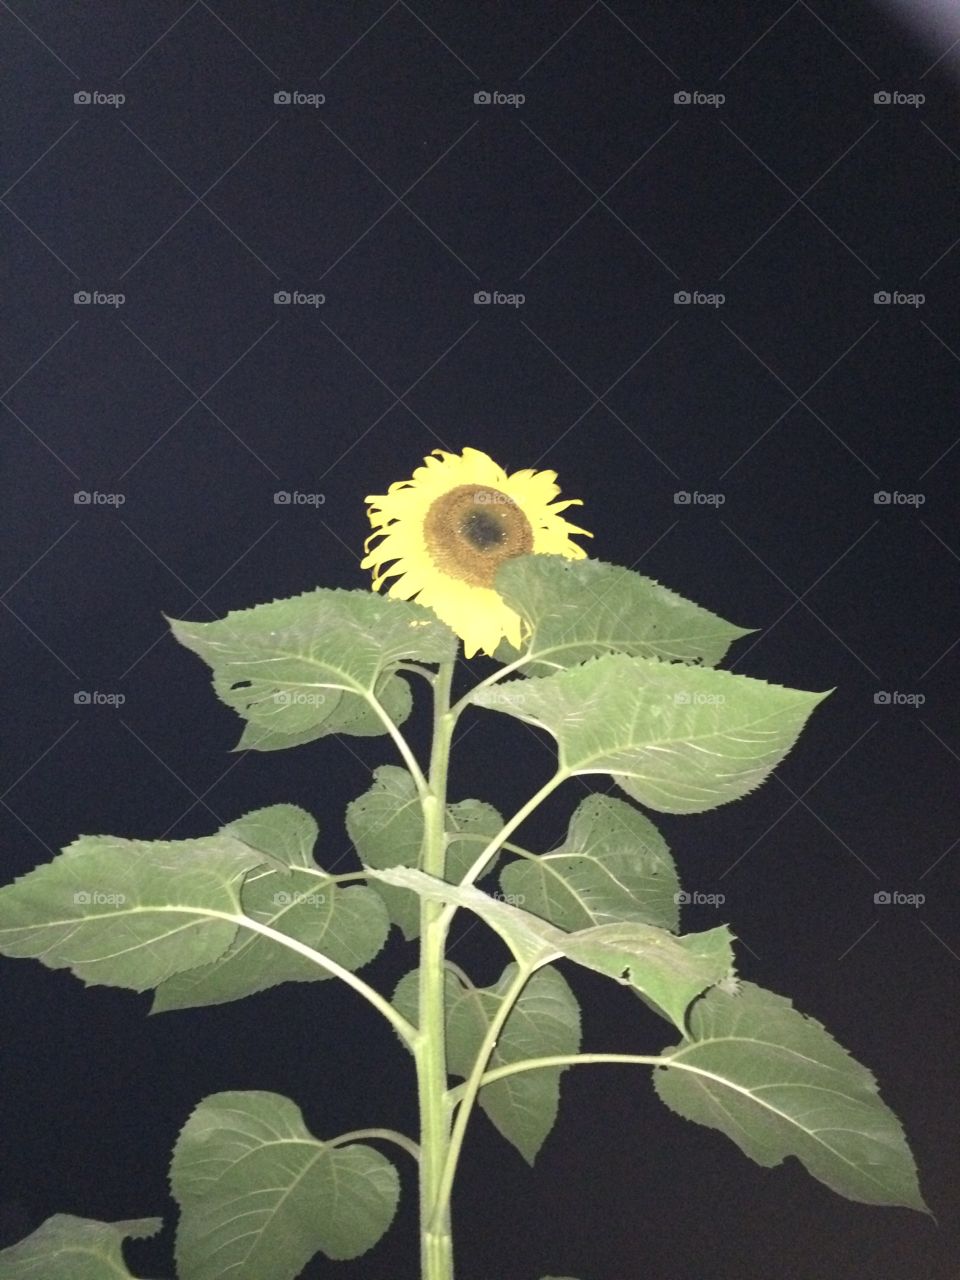 Sunflower at night . Huge flowers growing in Ohio in my backyard